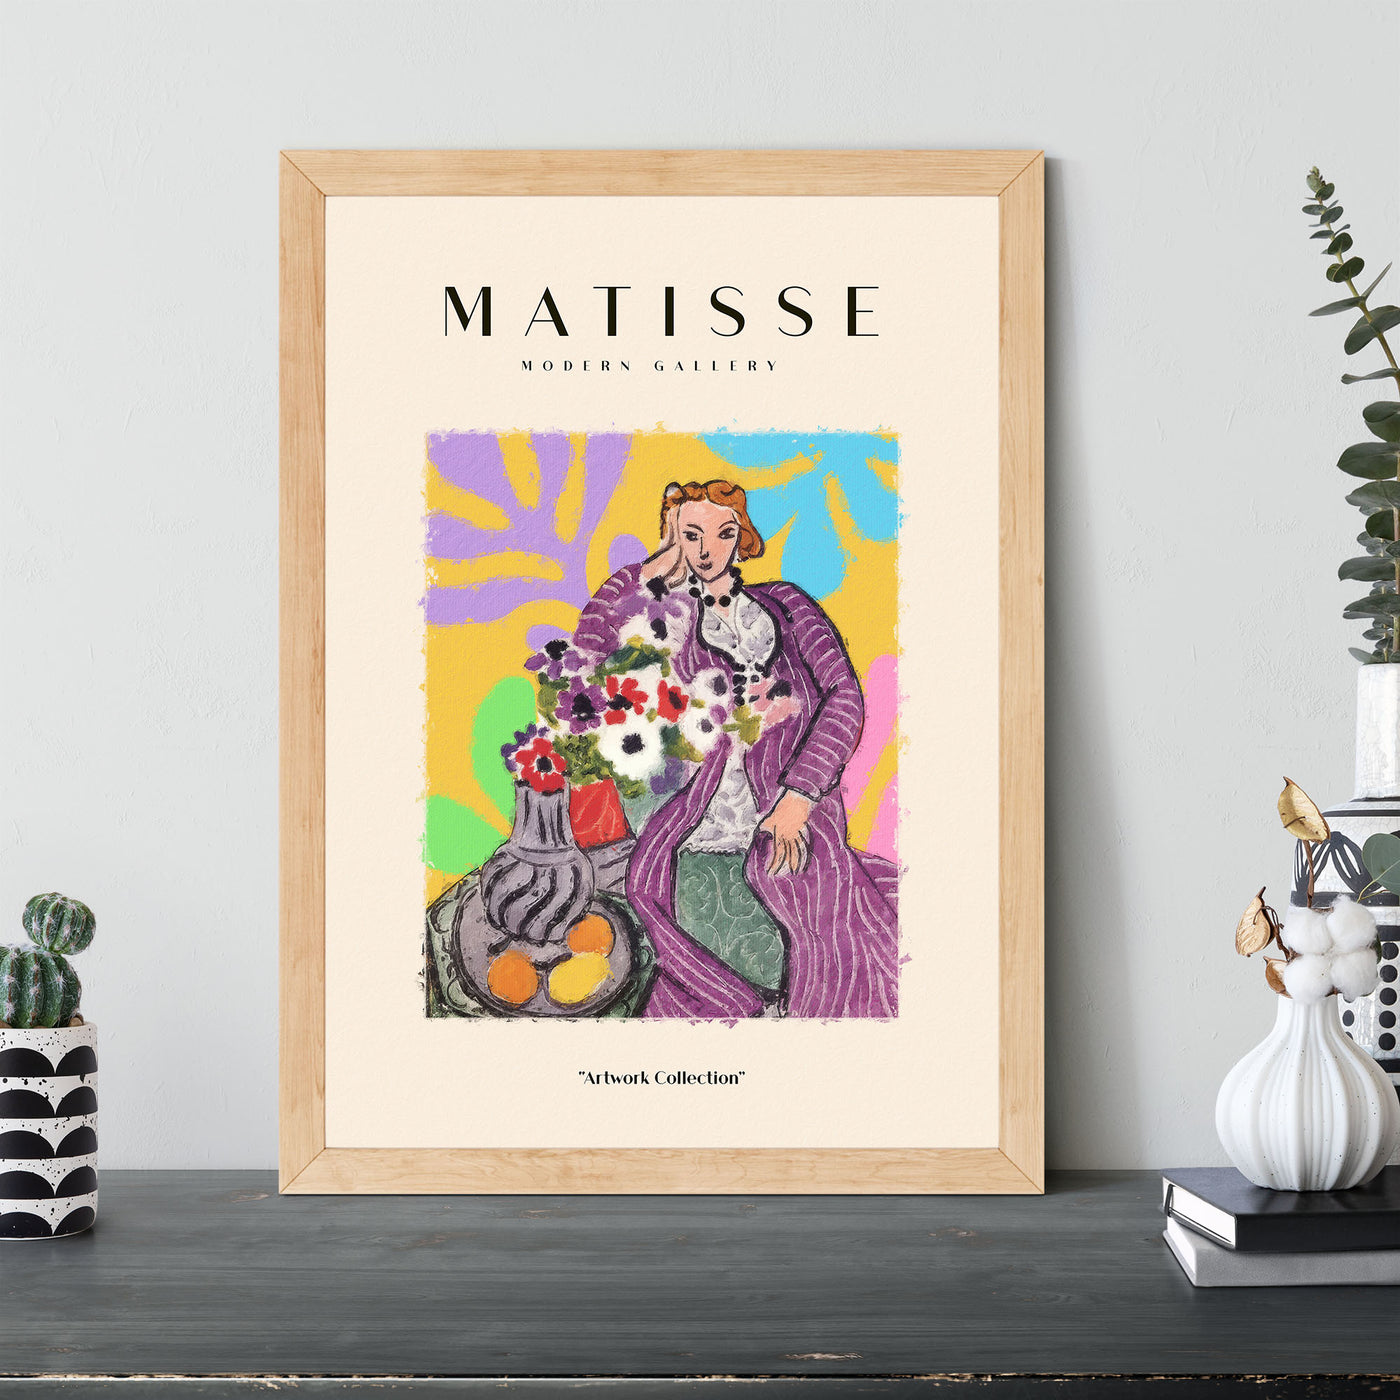 Henri Matisse - #64